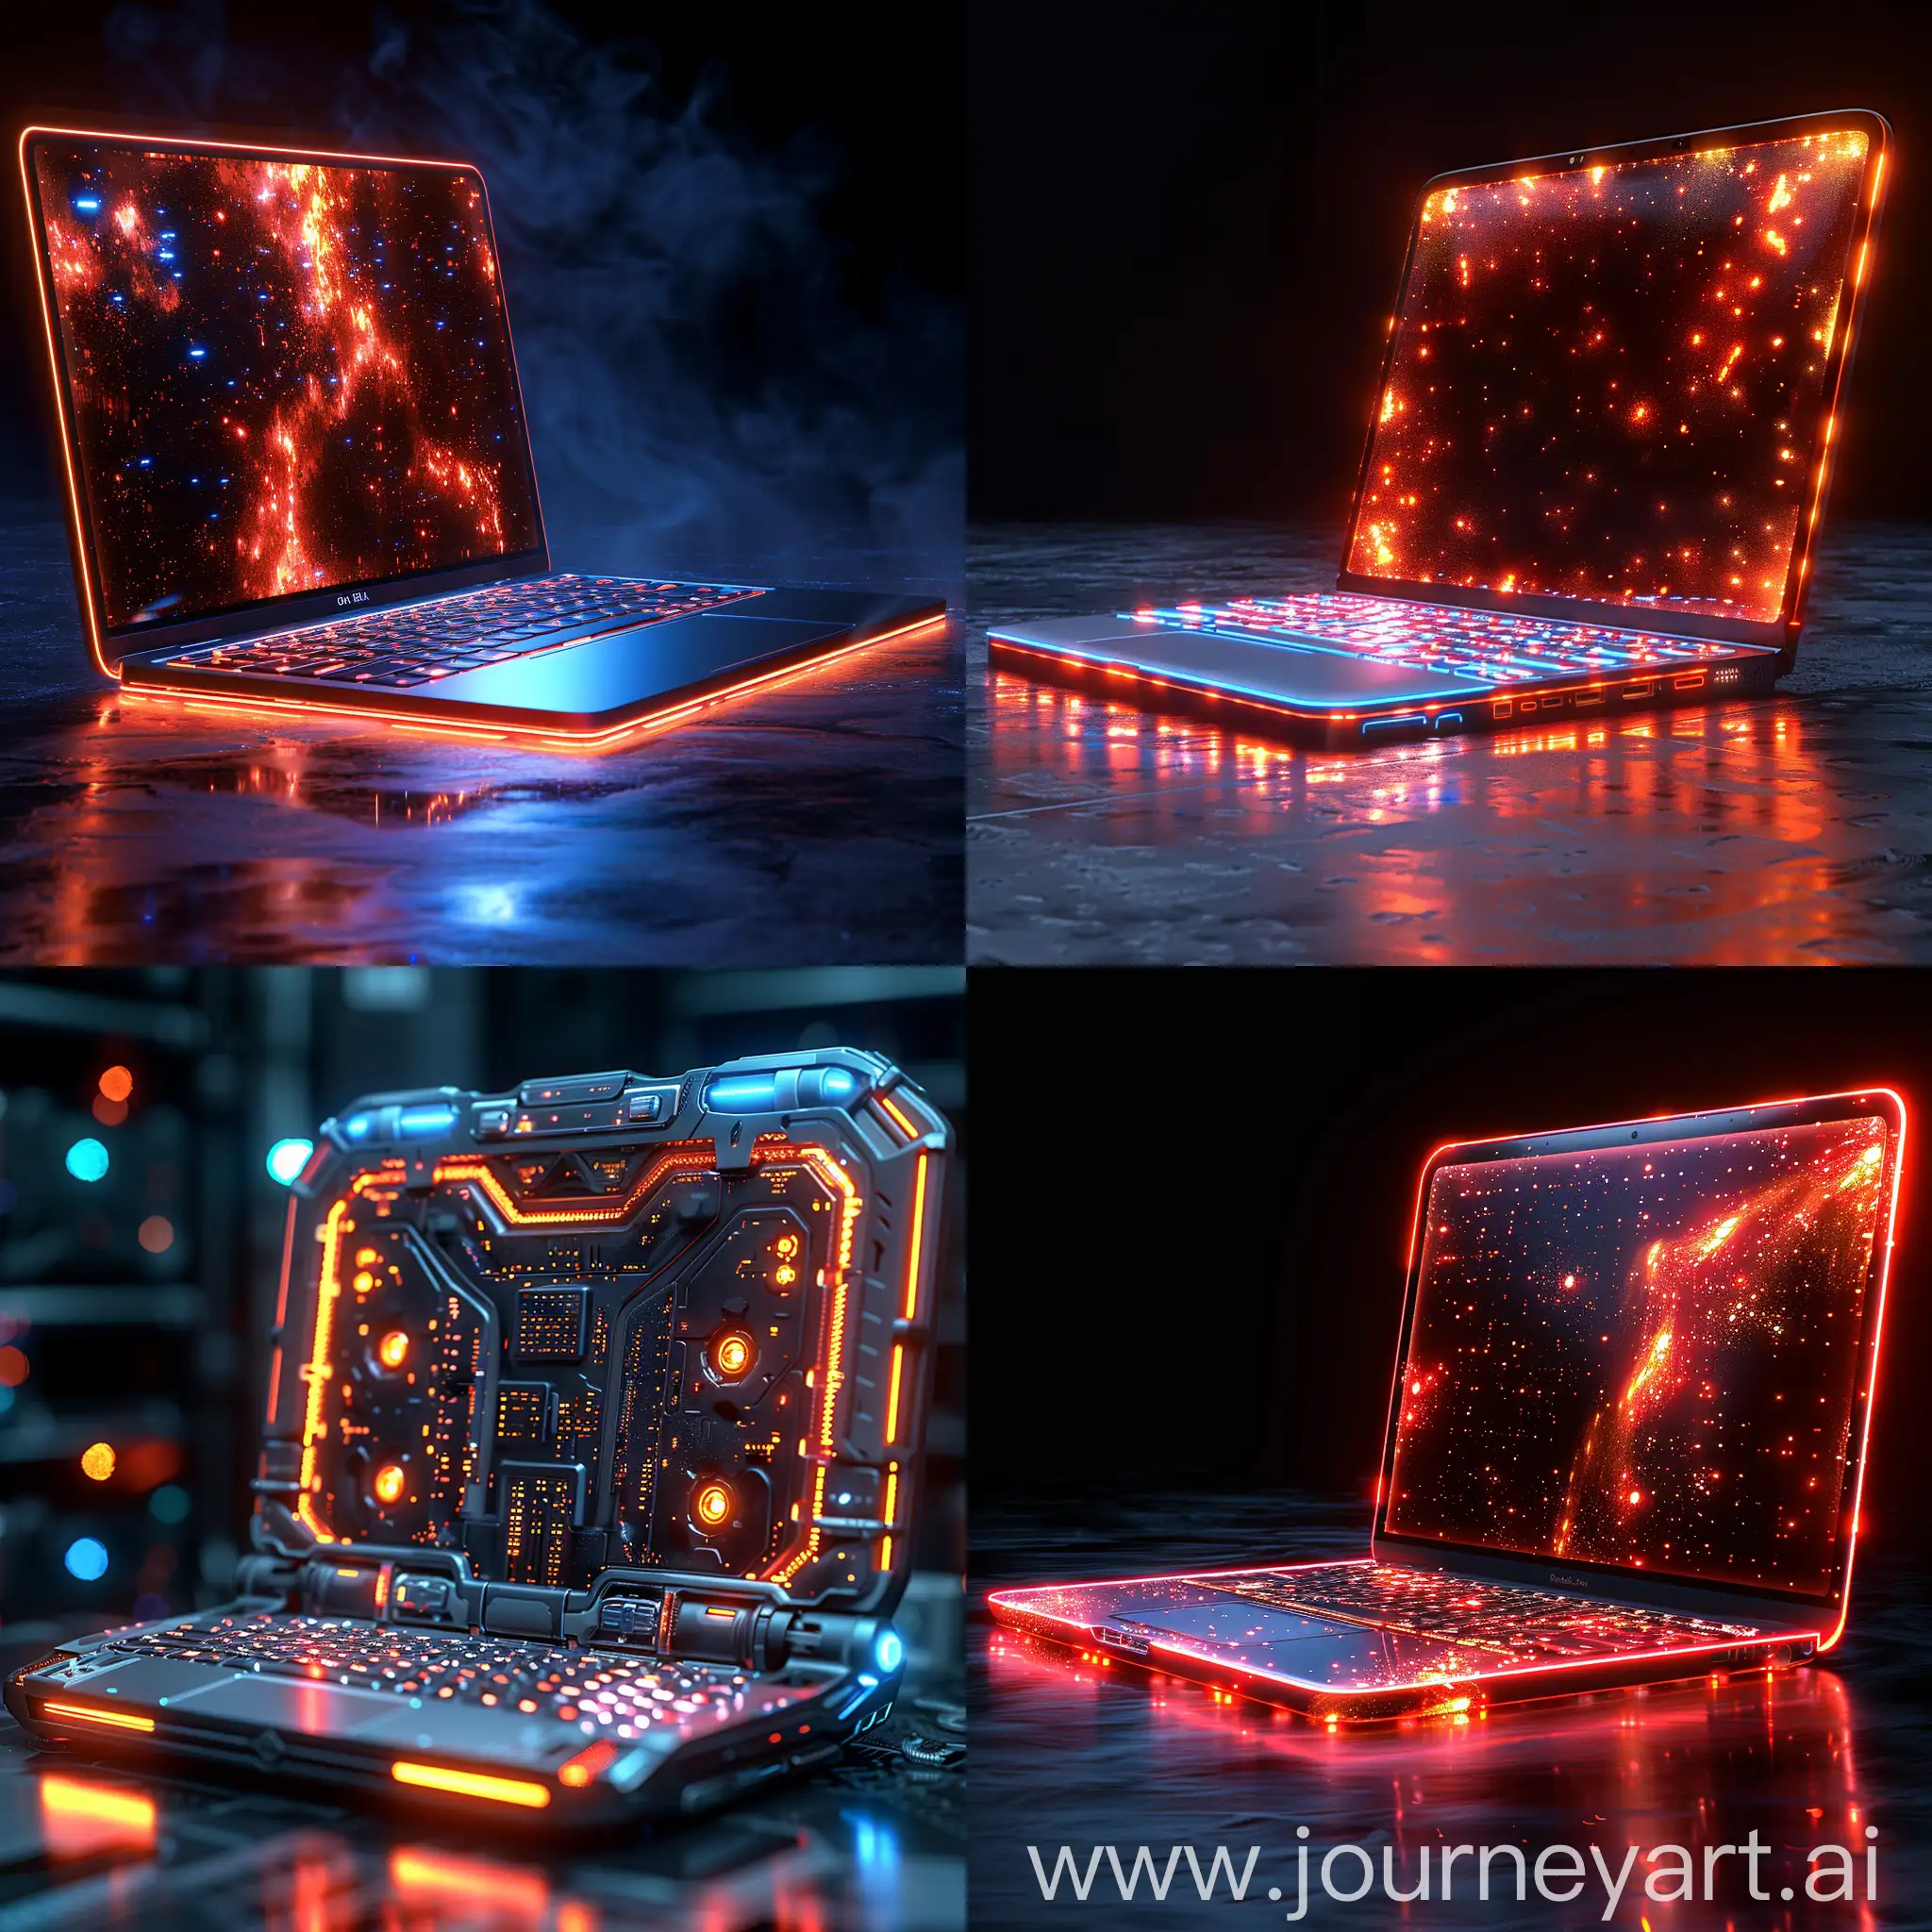 Futuristic-Bioluminescent-Laptop-with-HighTech-Style